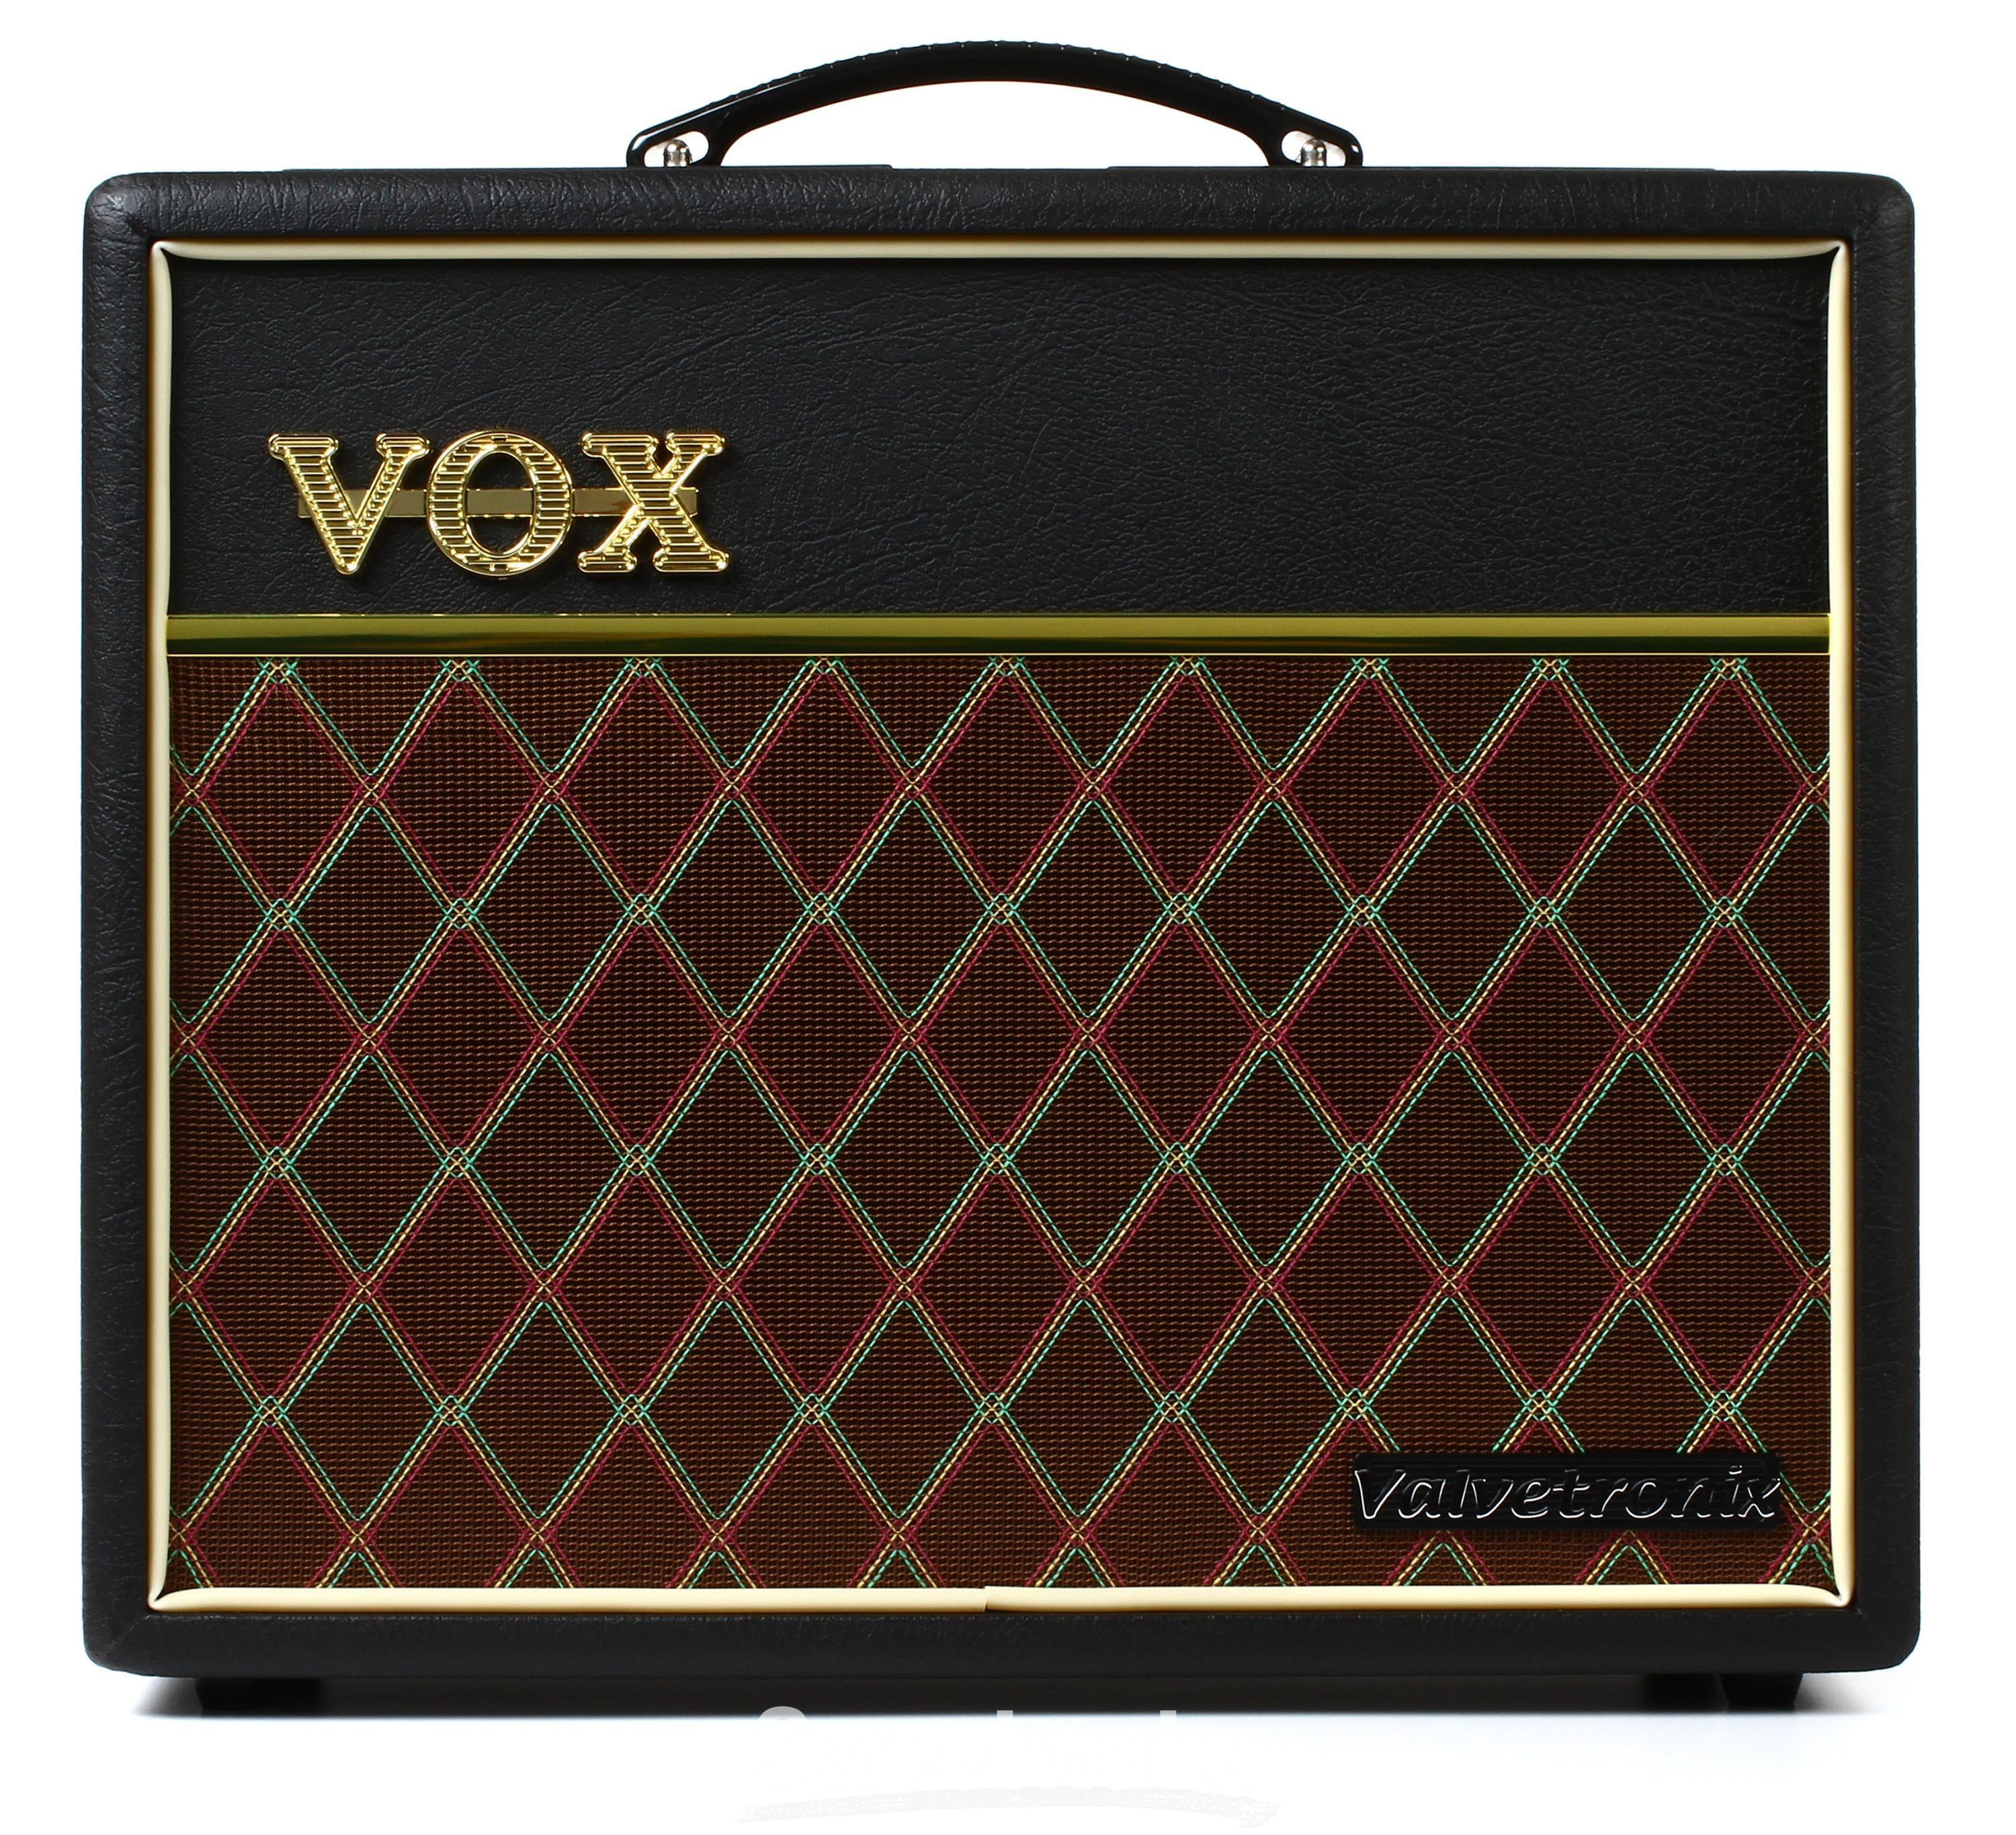 Vox Valvetronix VT20+ - Modeling 30W 1x8